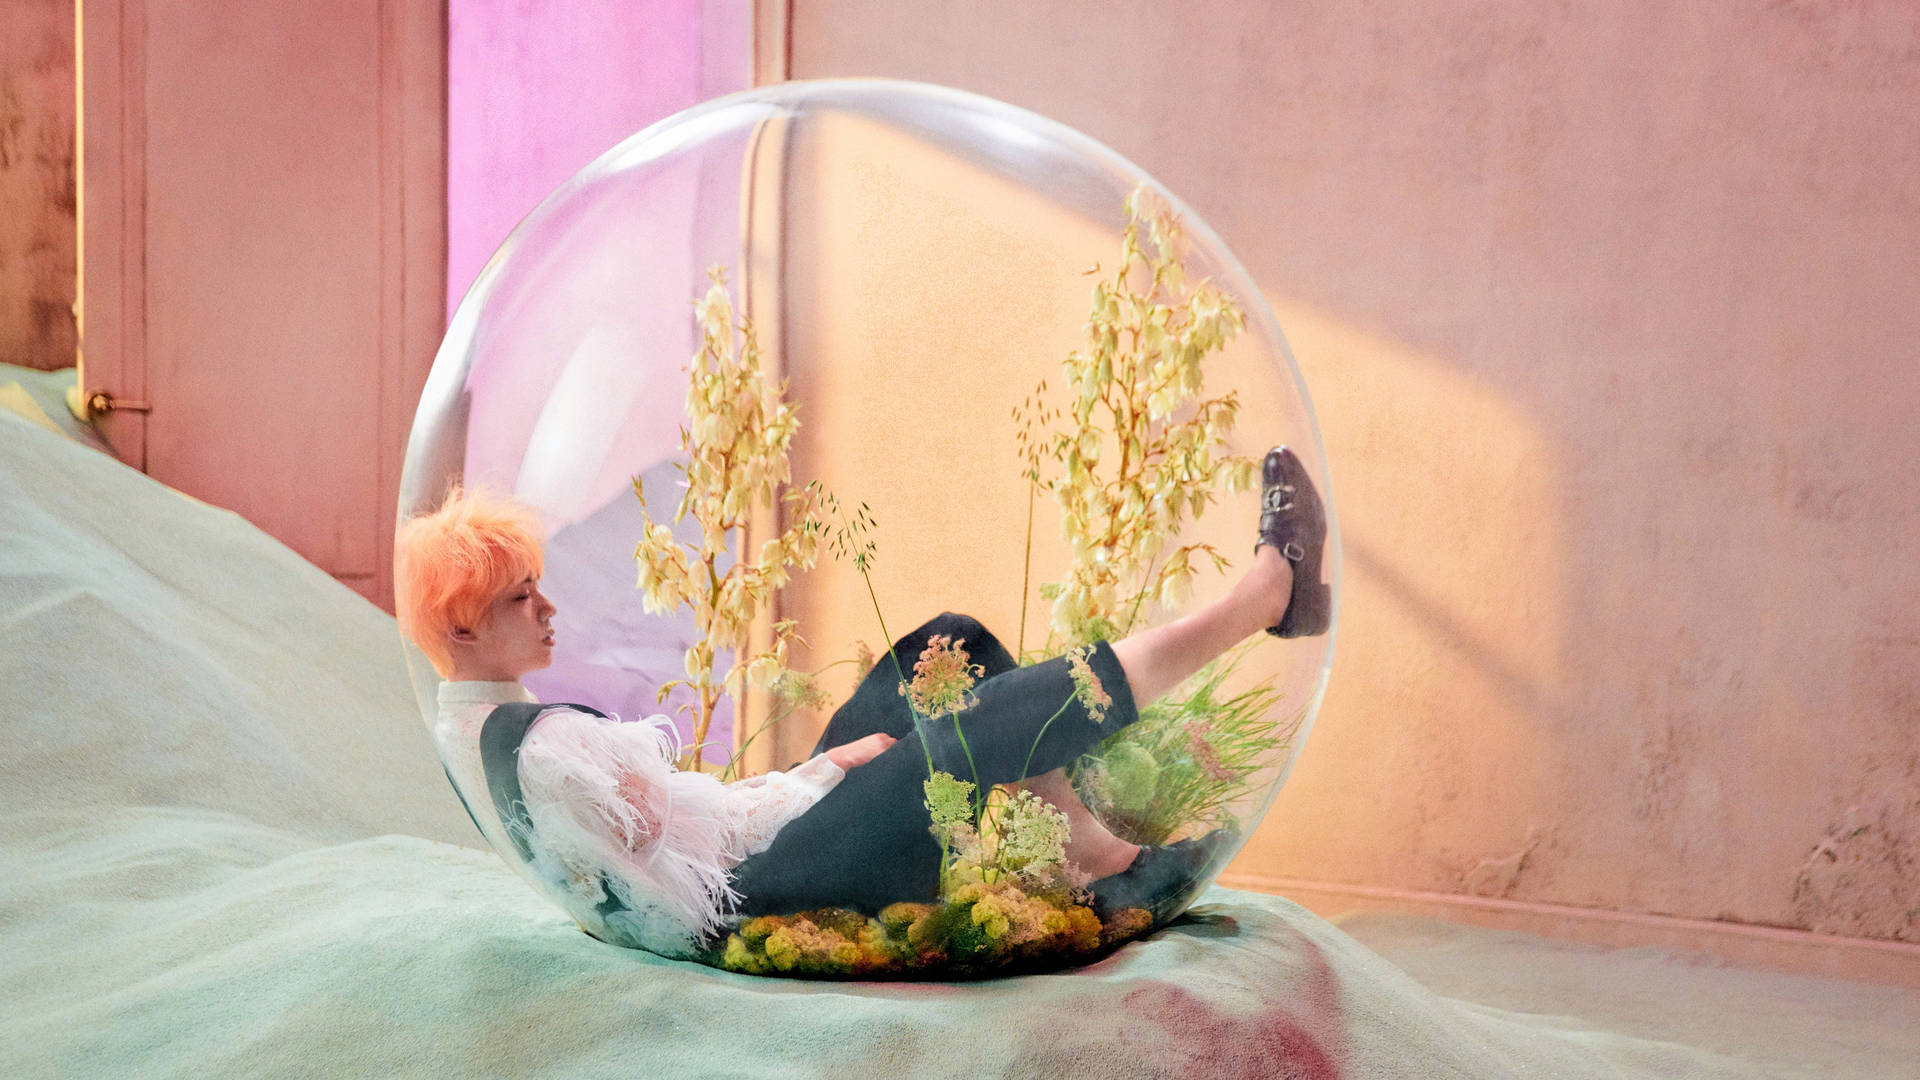 Bts Jin Inside The Floral Dome